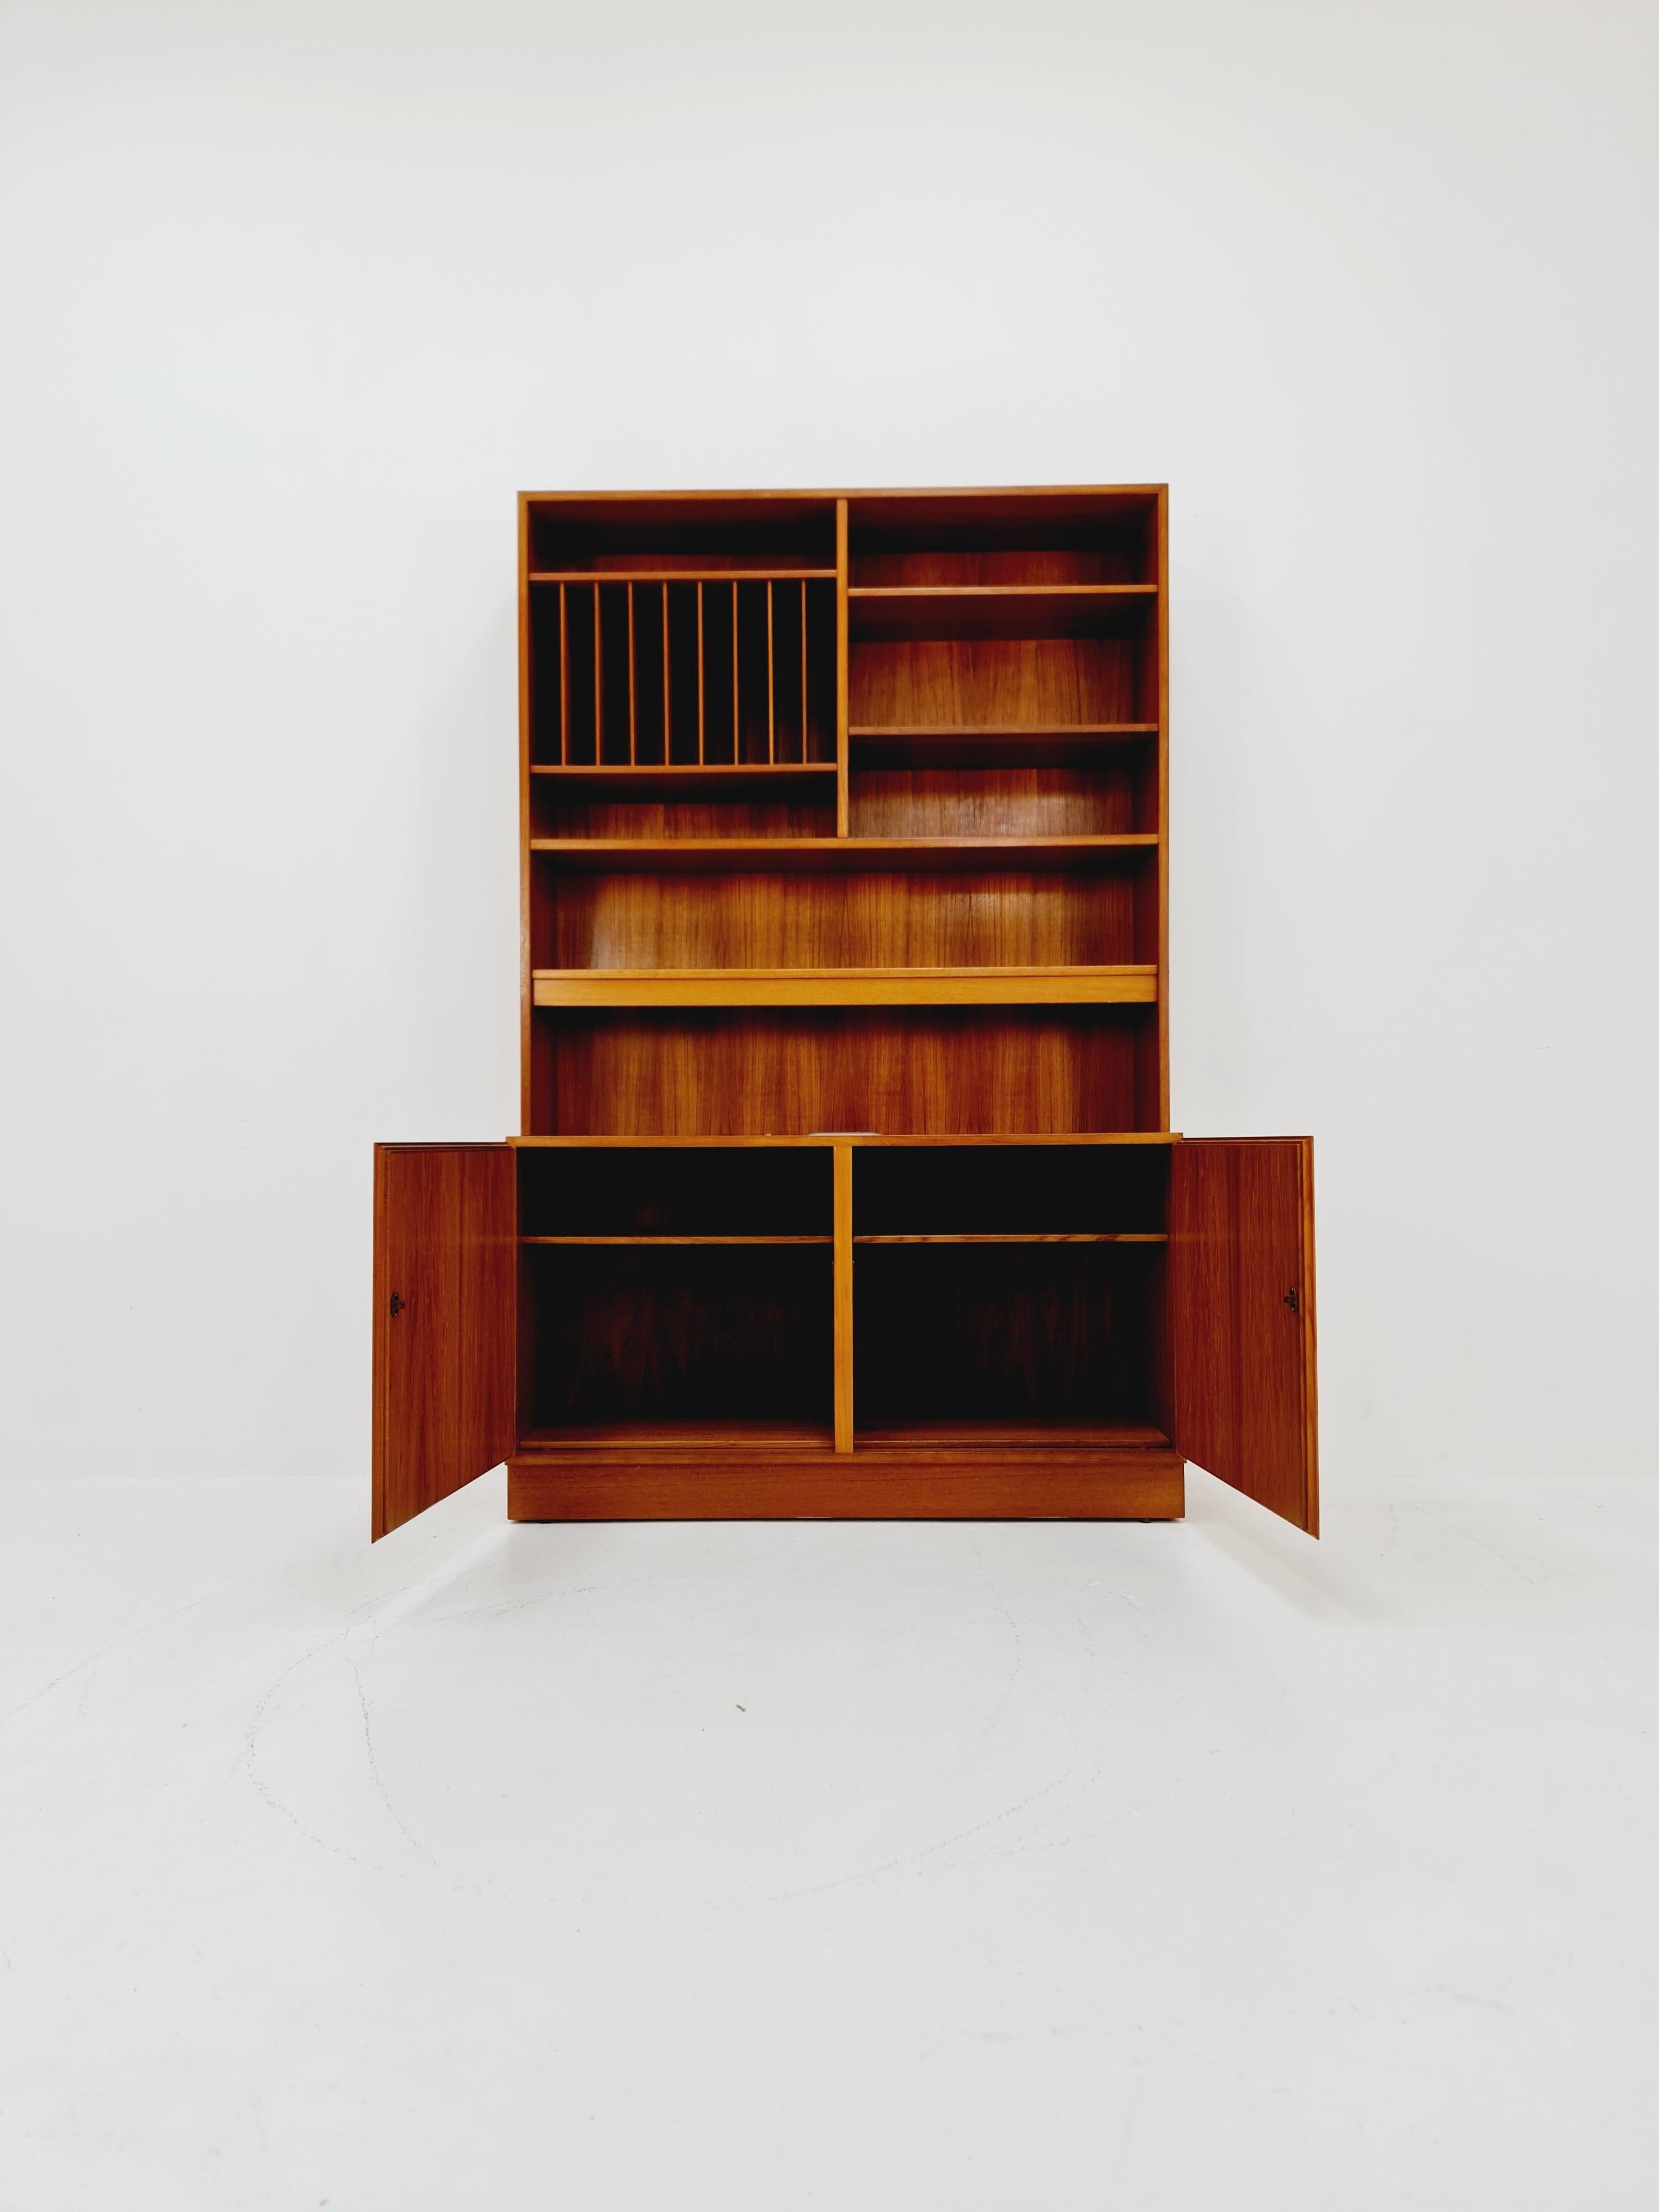 Danish freestanding vintage bookshelf system/ book case teak by Gunni Omann Jun , 1960s

Design : Danish design by the designer Omman Jun 

Dimensions:

Height: 188 cm
Width: 120  cm 
Depth: 42  cm


It is in good vintage condition, however, as with